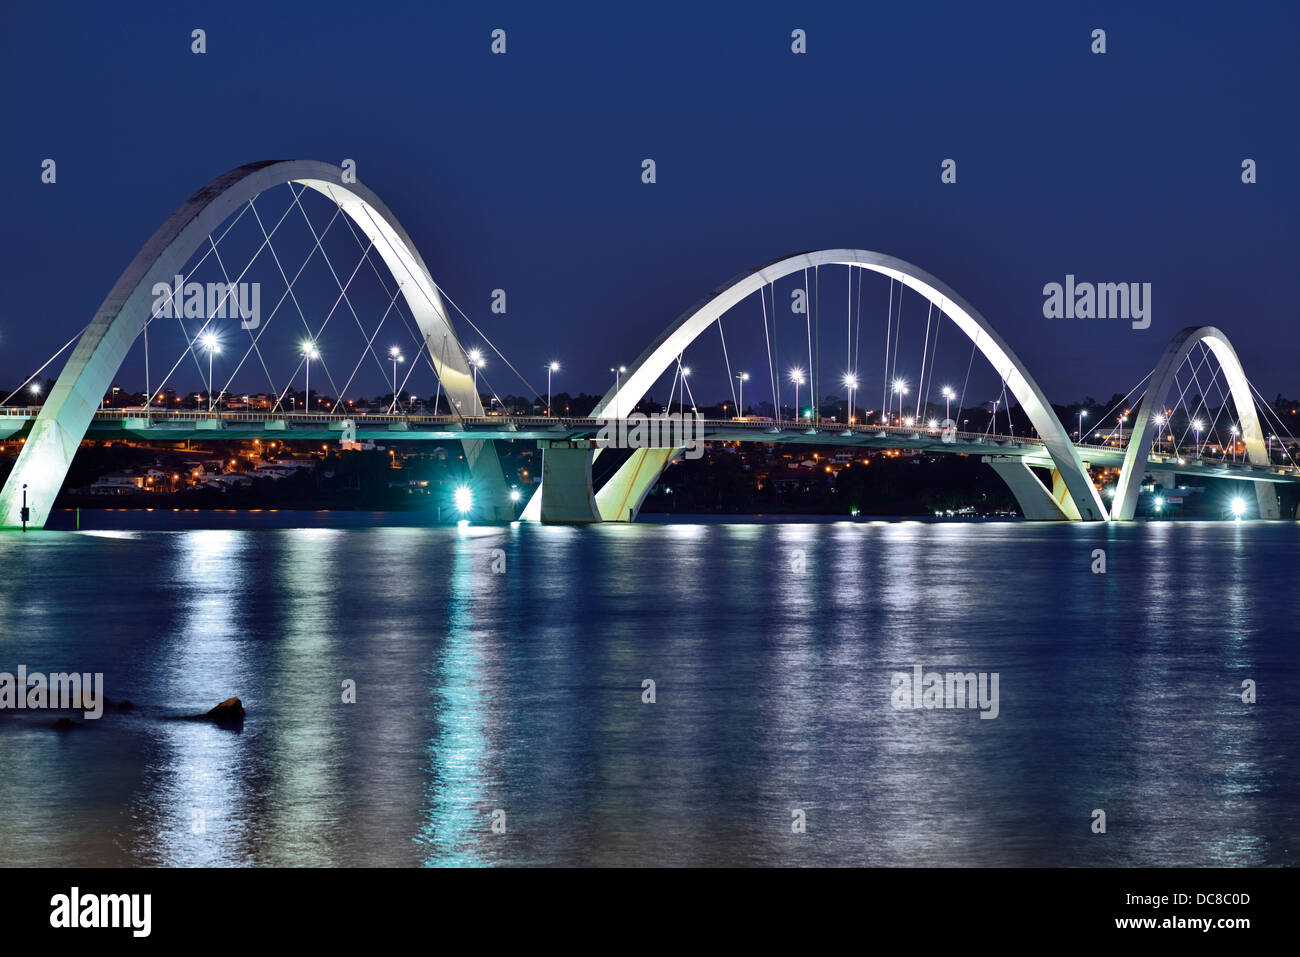 Il Brasile, Brasilia: Jucelino-Kubitschek-ponte sopra il Lago Paranoá bei notte Foto Stock